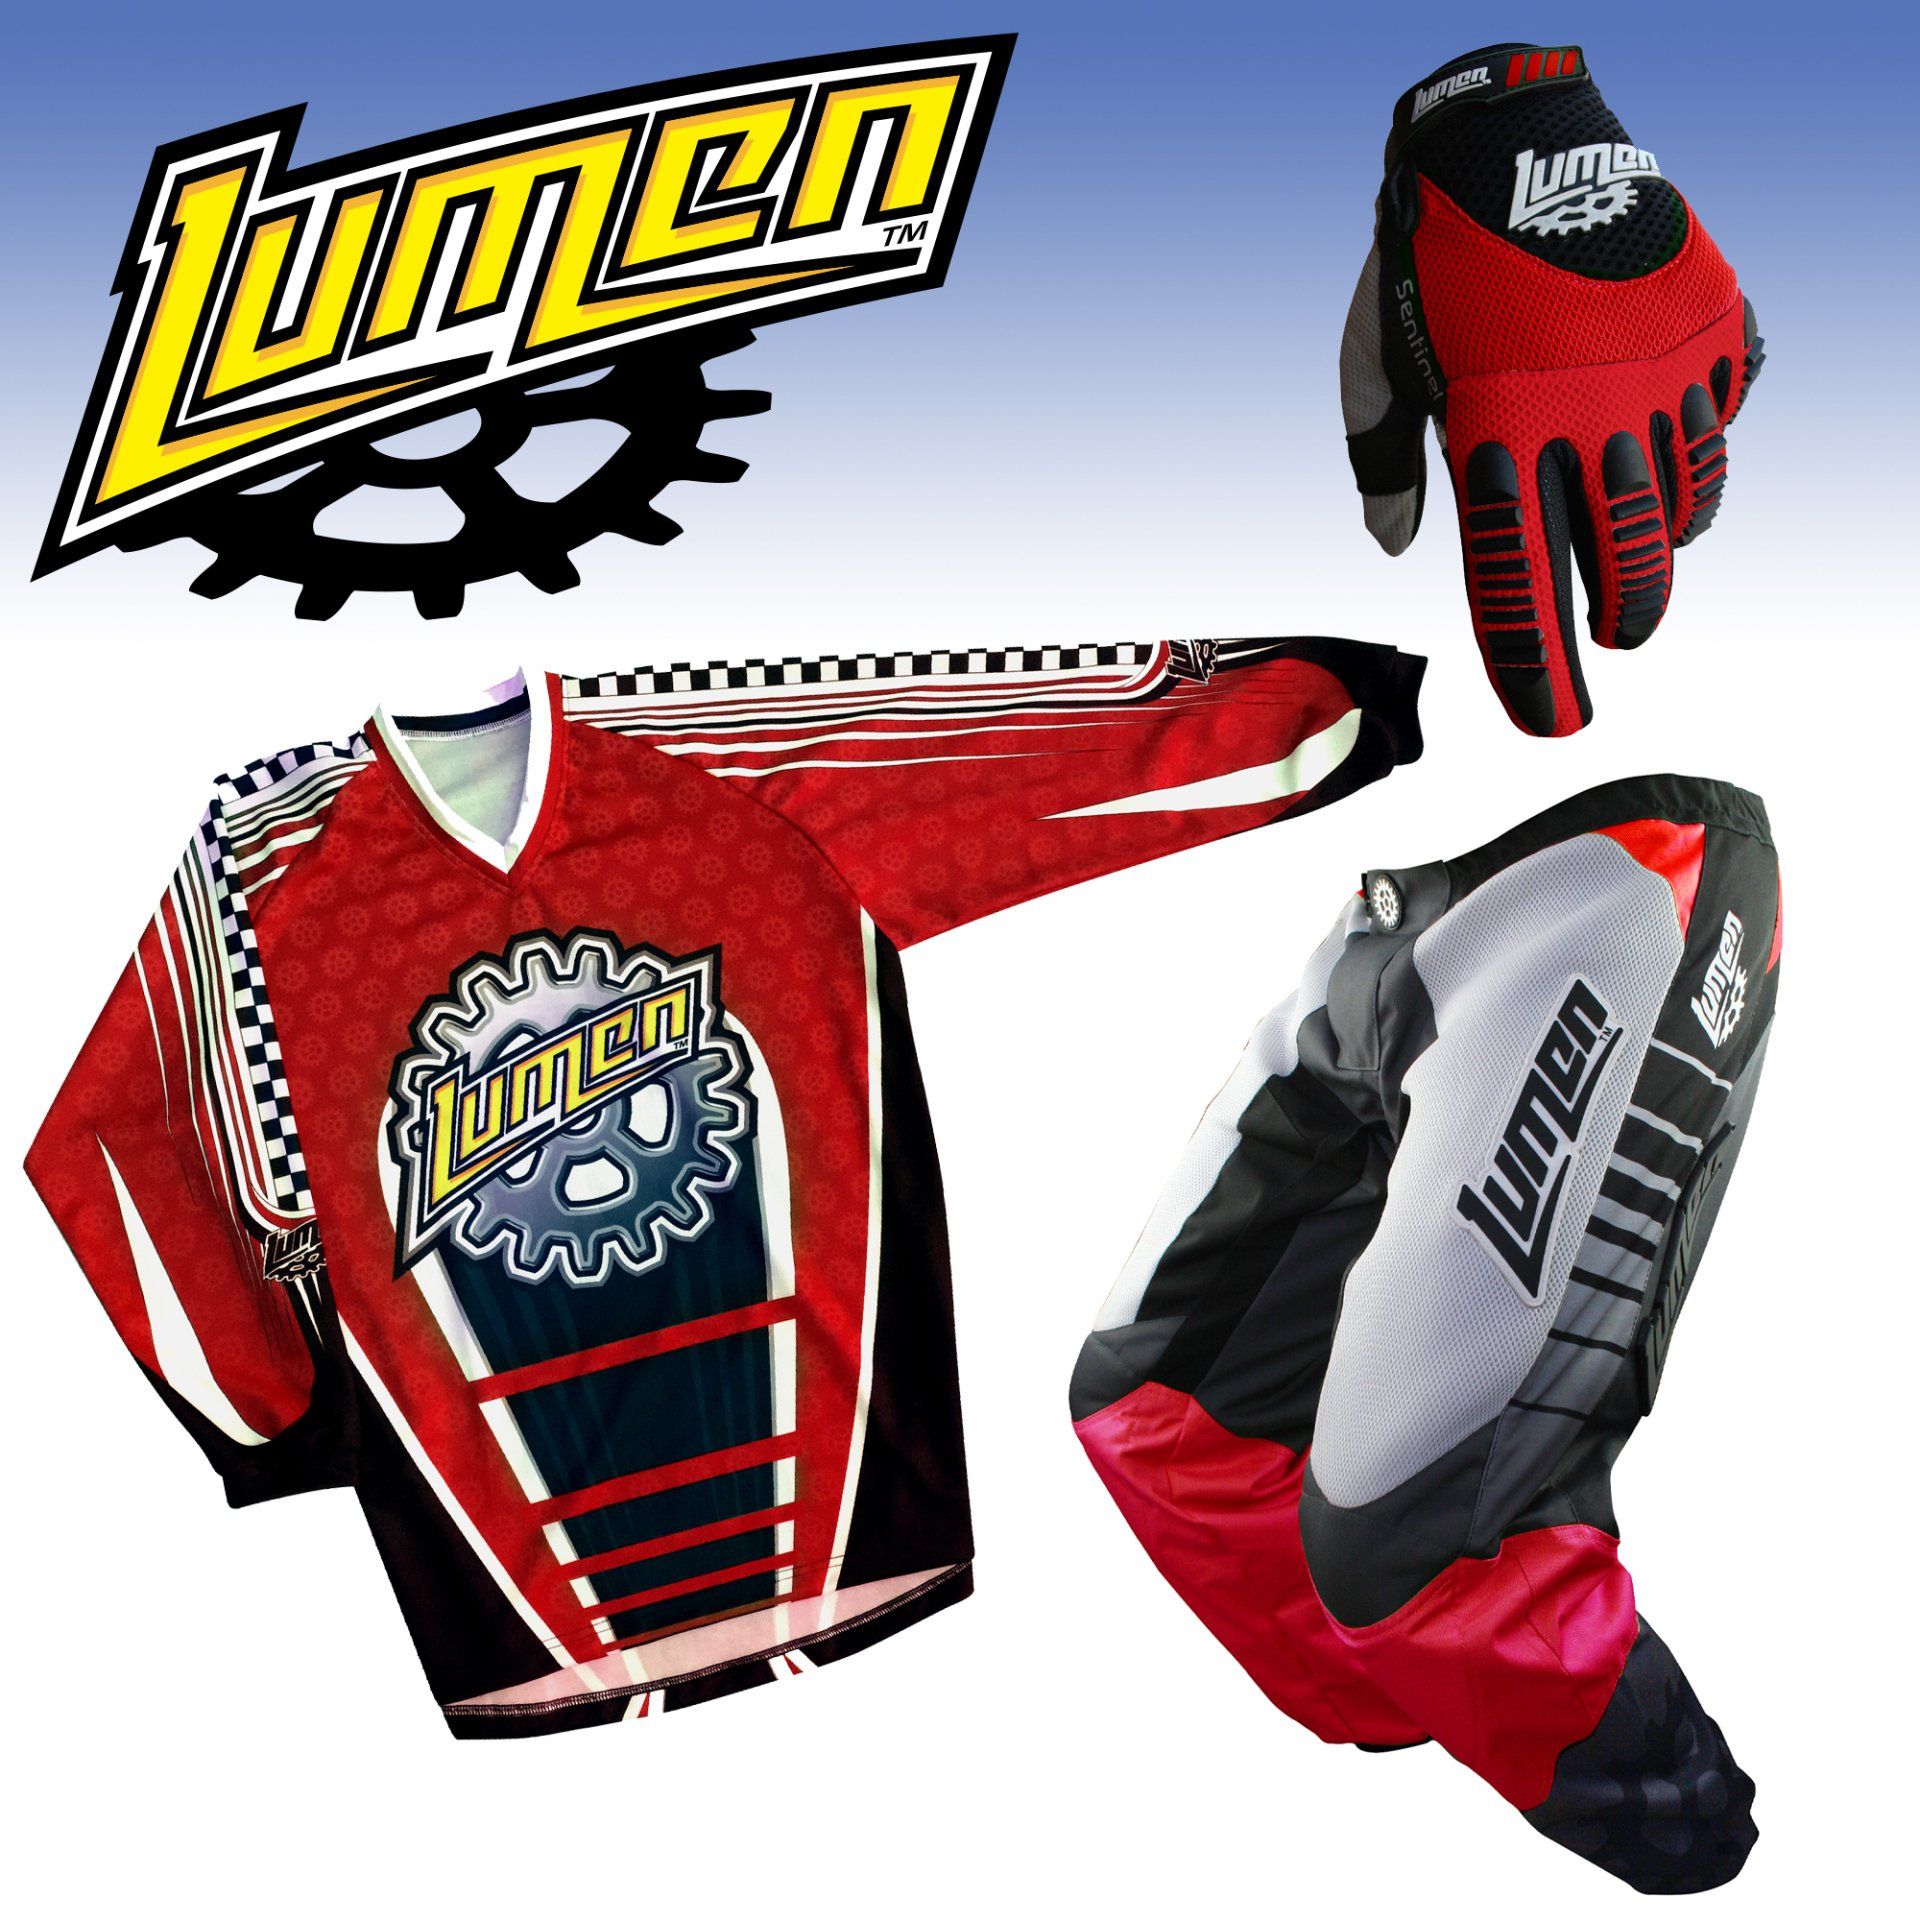 Lumen Industries, branding, gloves, sports apparel,